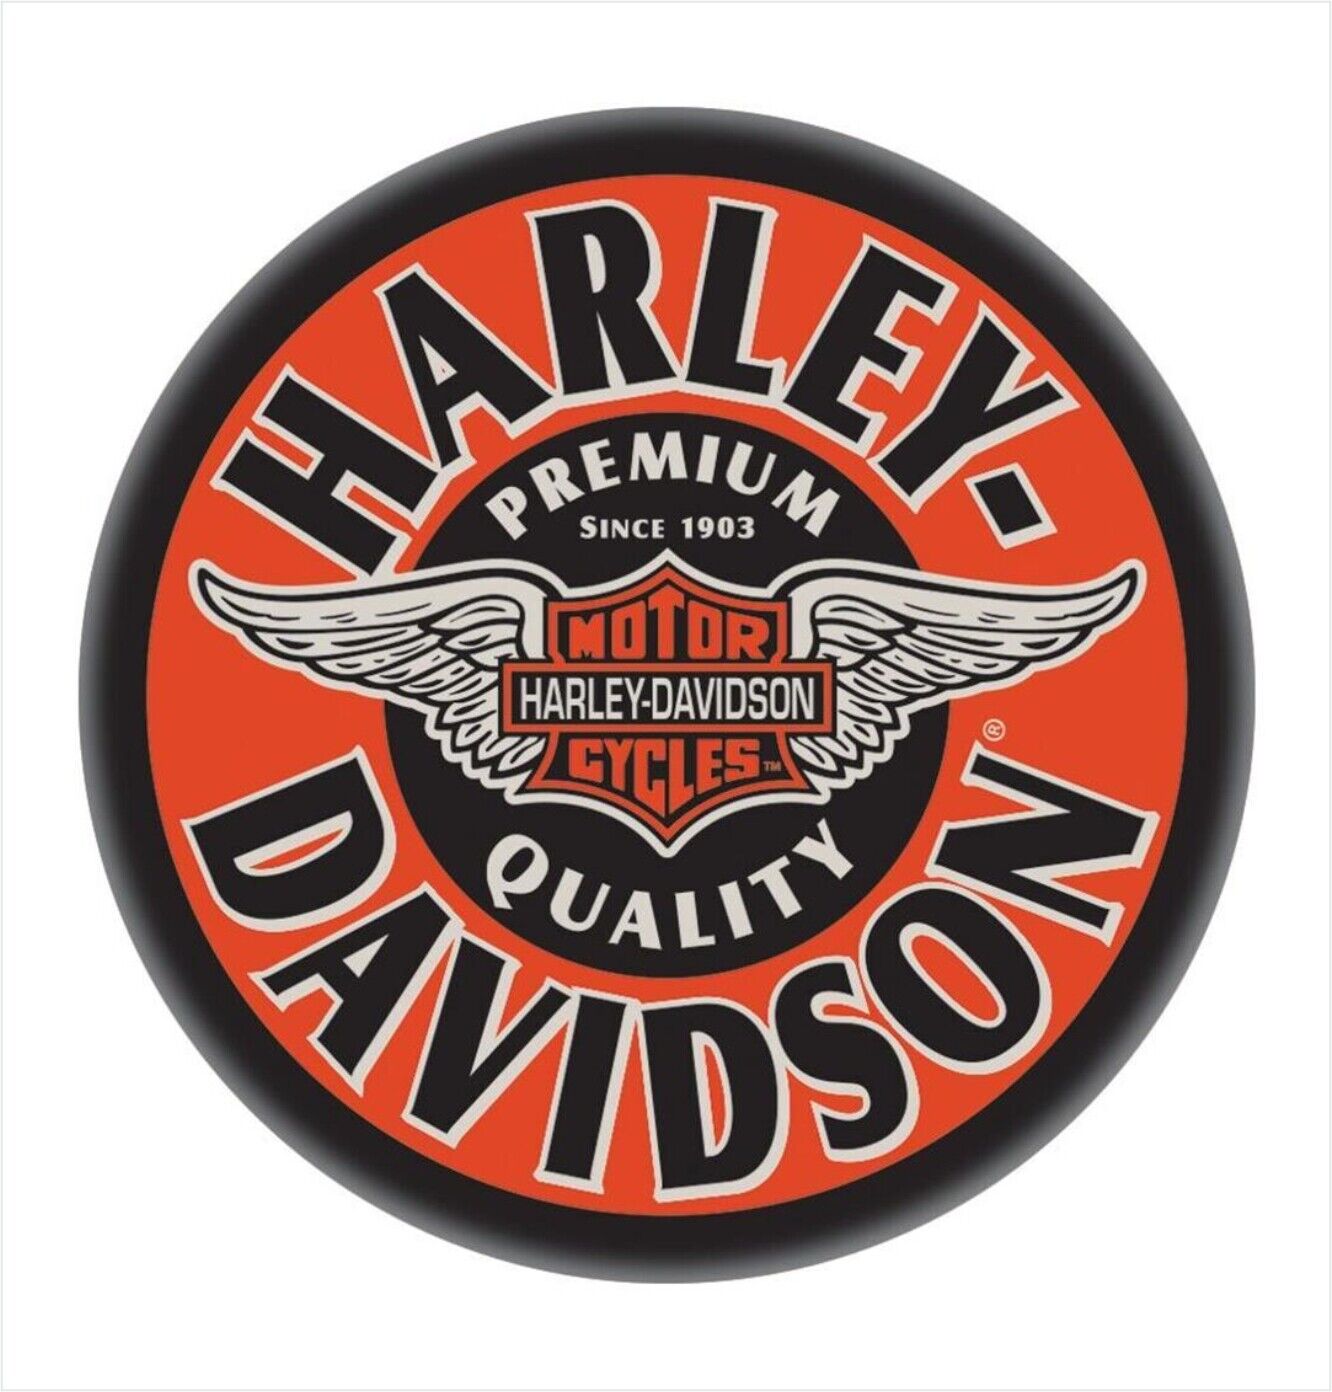 Harley Davidson Vintage Style Decal, Sticker 4